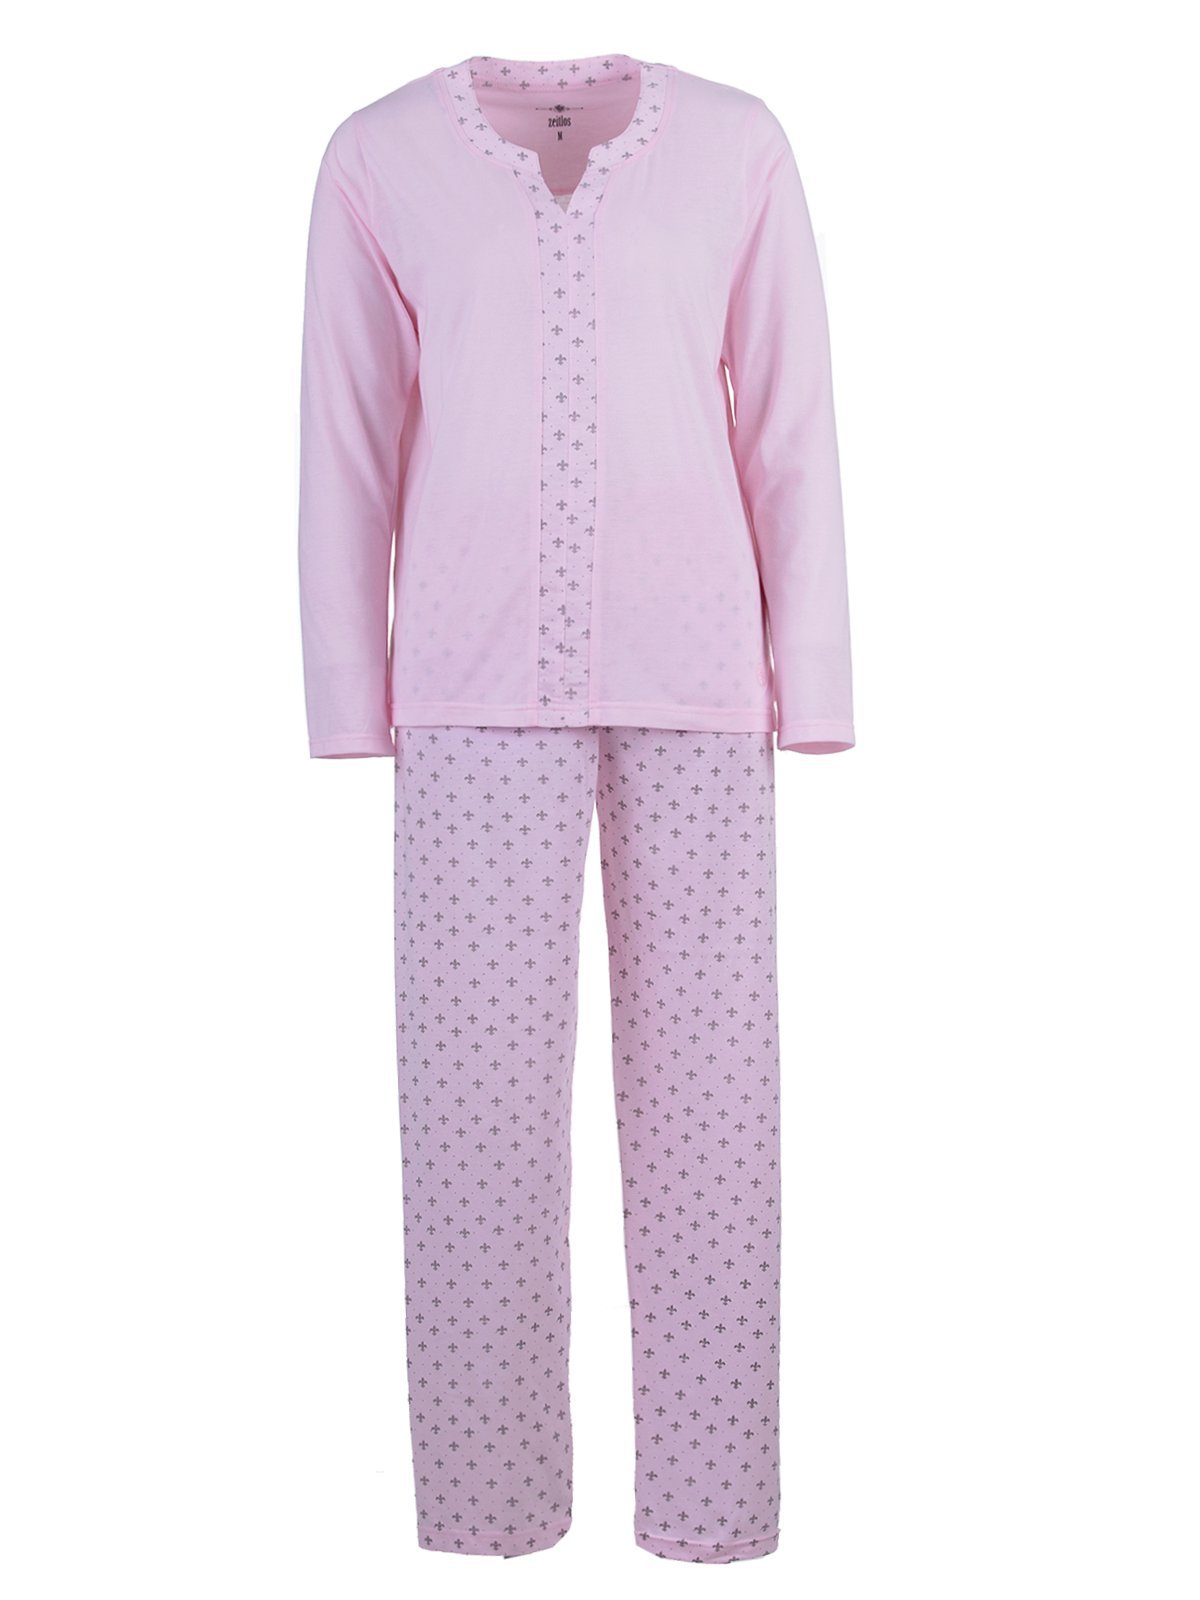 zeitlos Schlafanzug Pyjama Set Langarm Lilie rosa - Borte